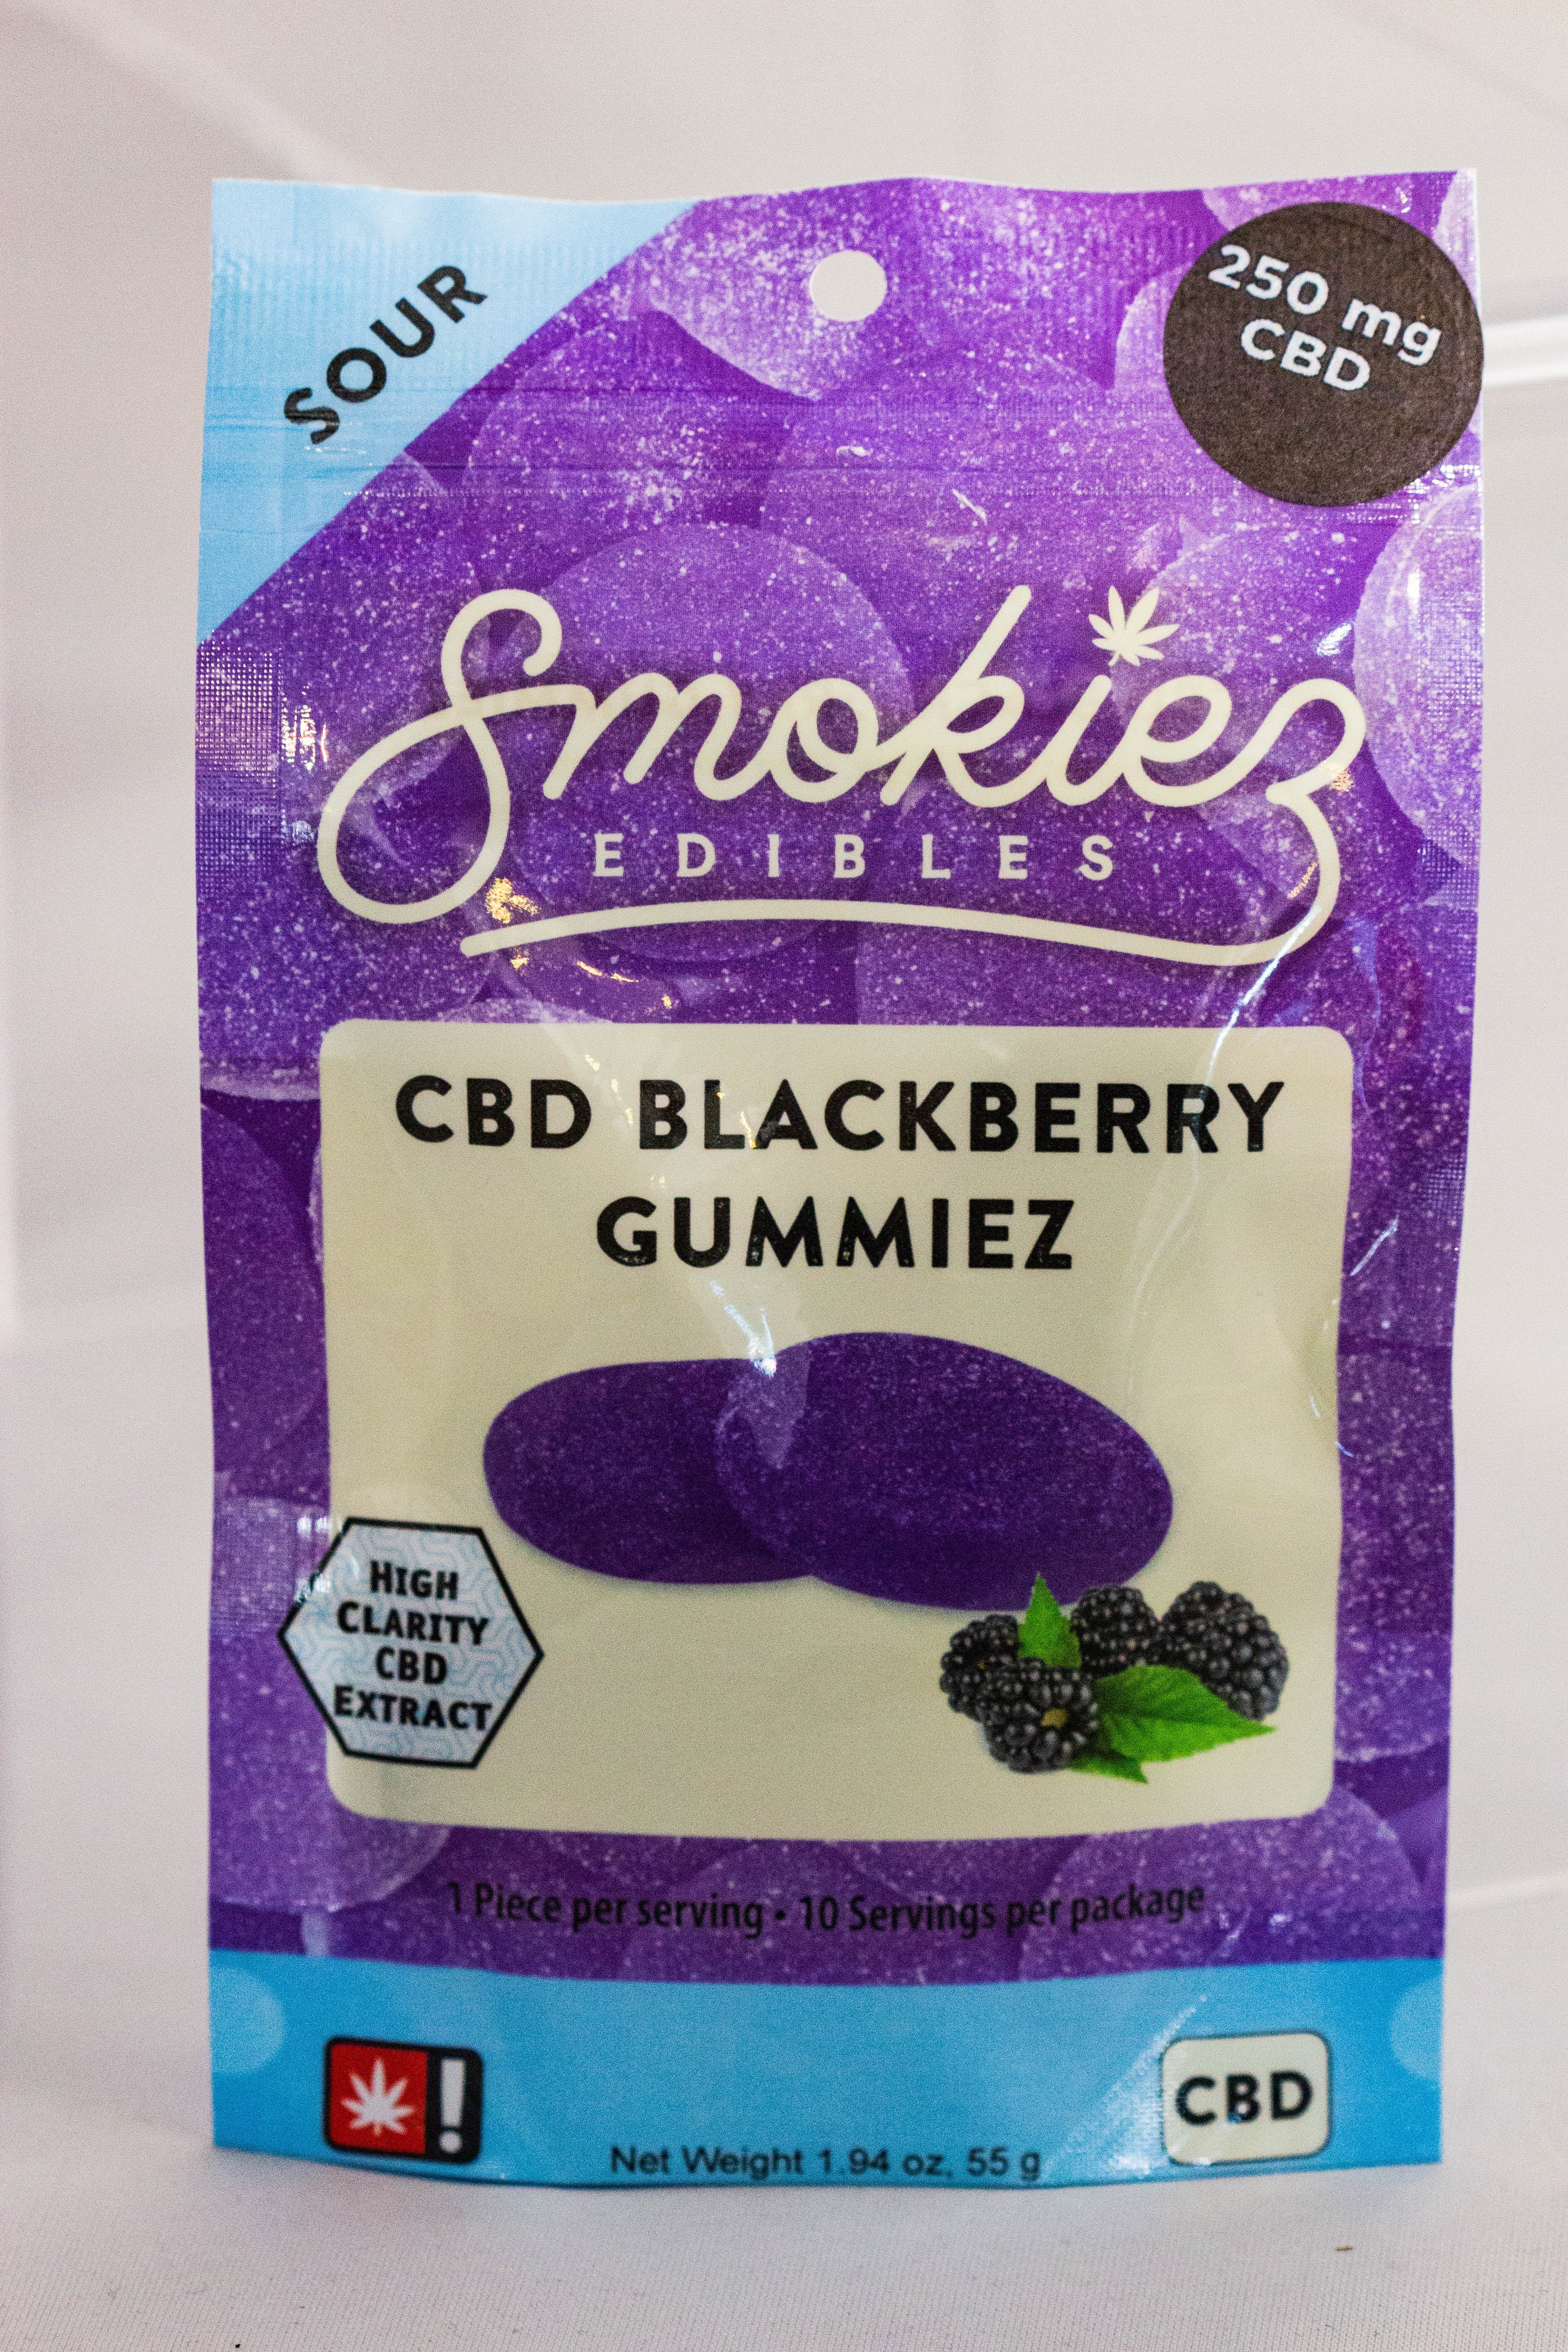 edible-blackberry-cbd-gummiez-10pk-by-smokiez